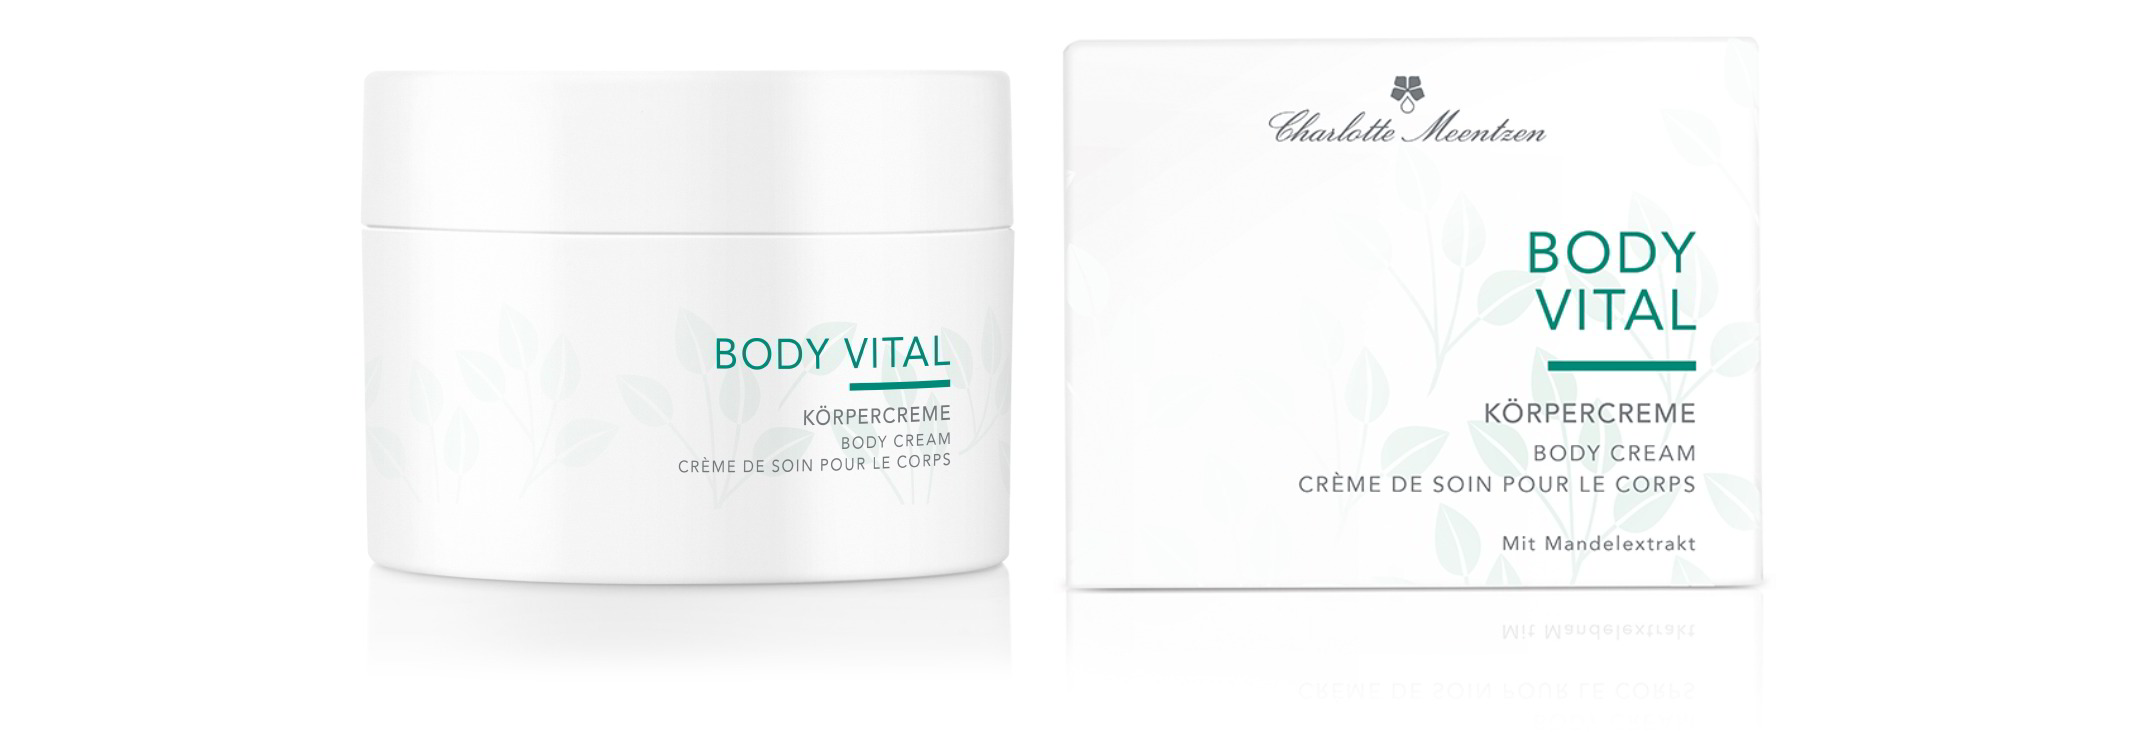 Body Vital Body Cream